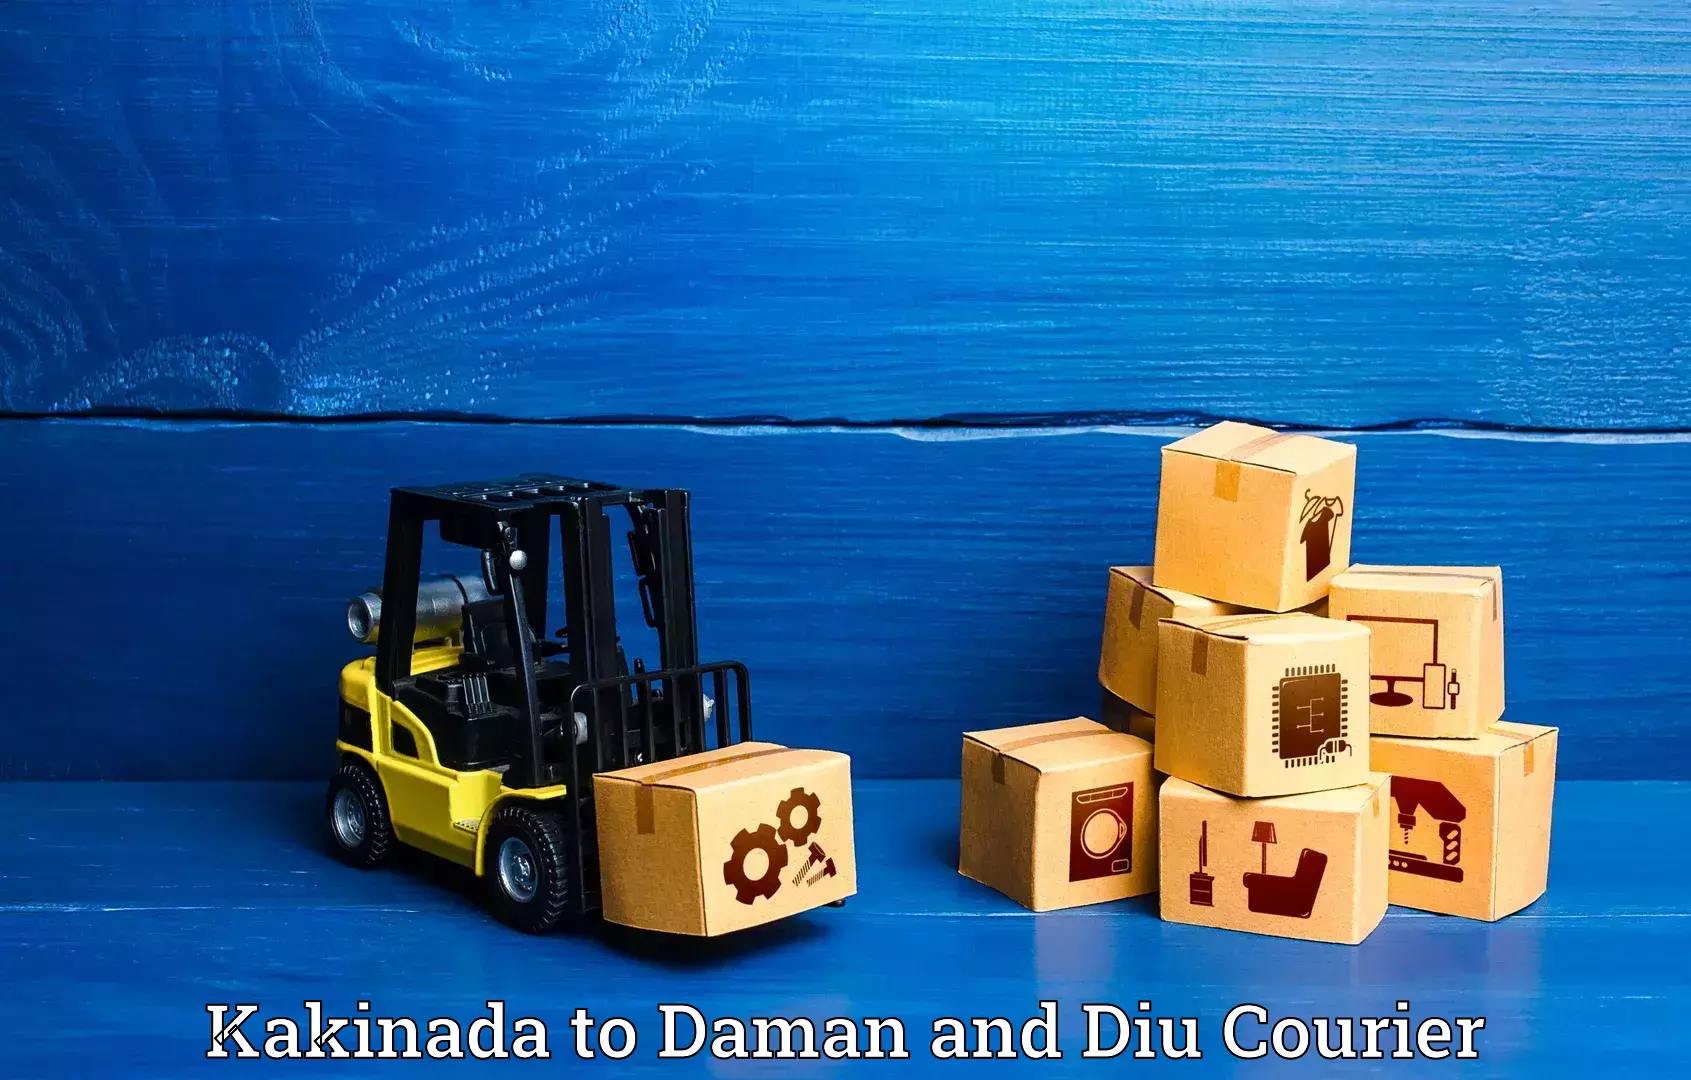 Luggage shipment specialists Kakinada to Daman and Diu